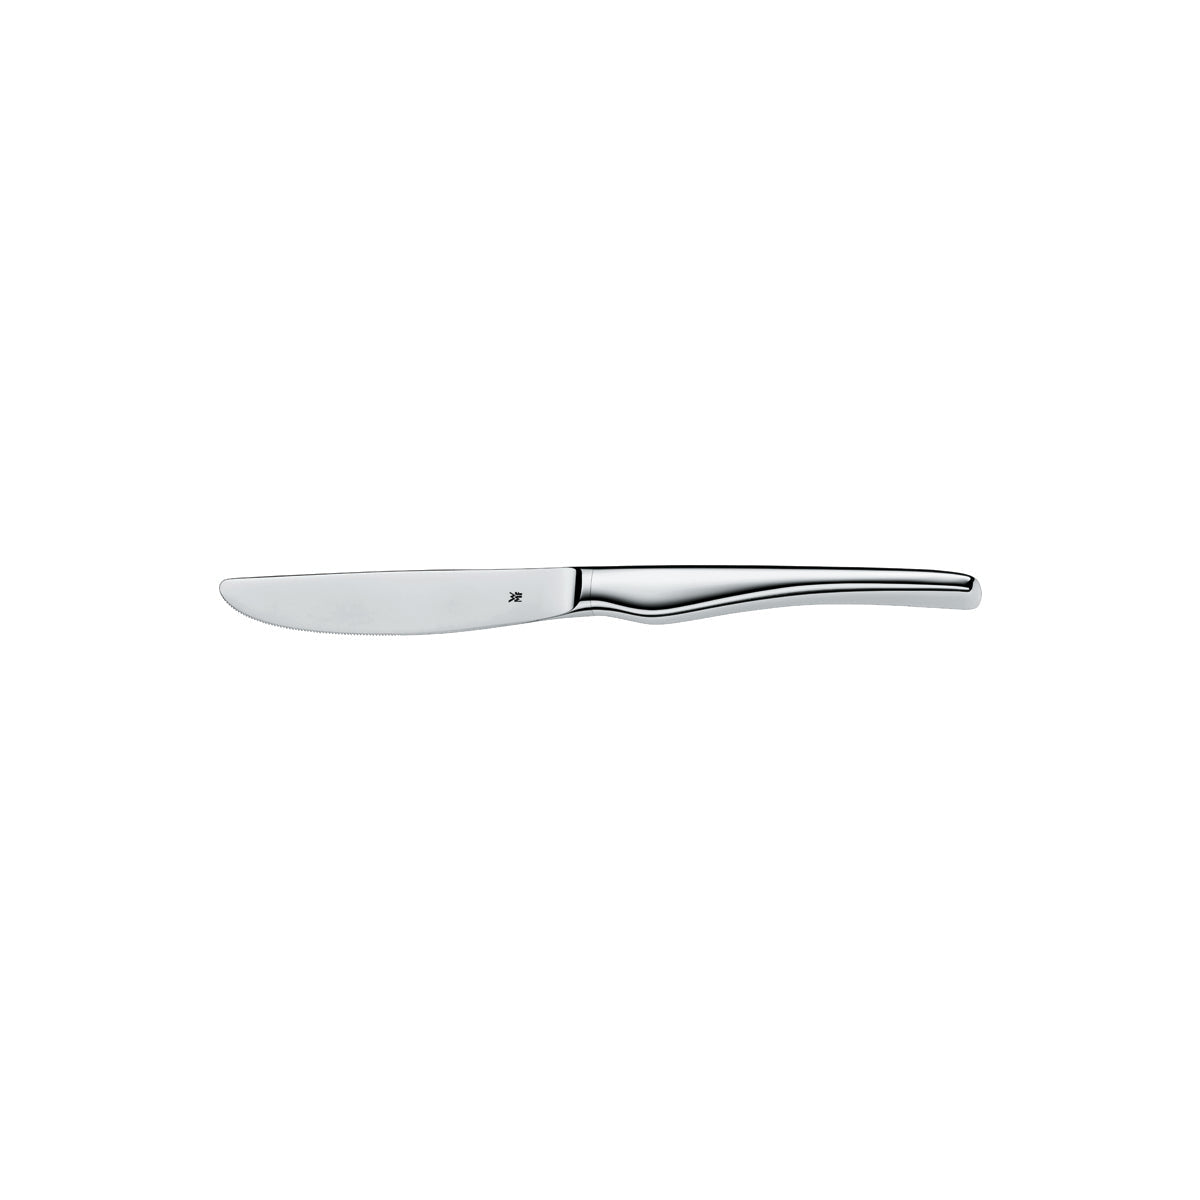 54.1603.6047 WMF Epos Table Knife - Hollow Handle Stainless Steel Tomkin Australia Hospitality Supplies